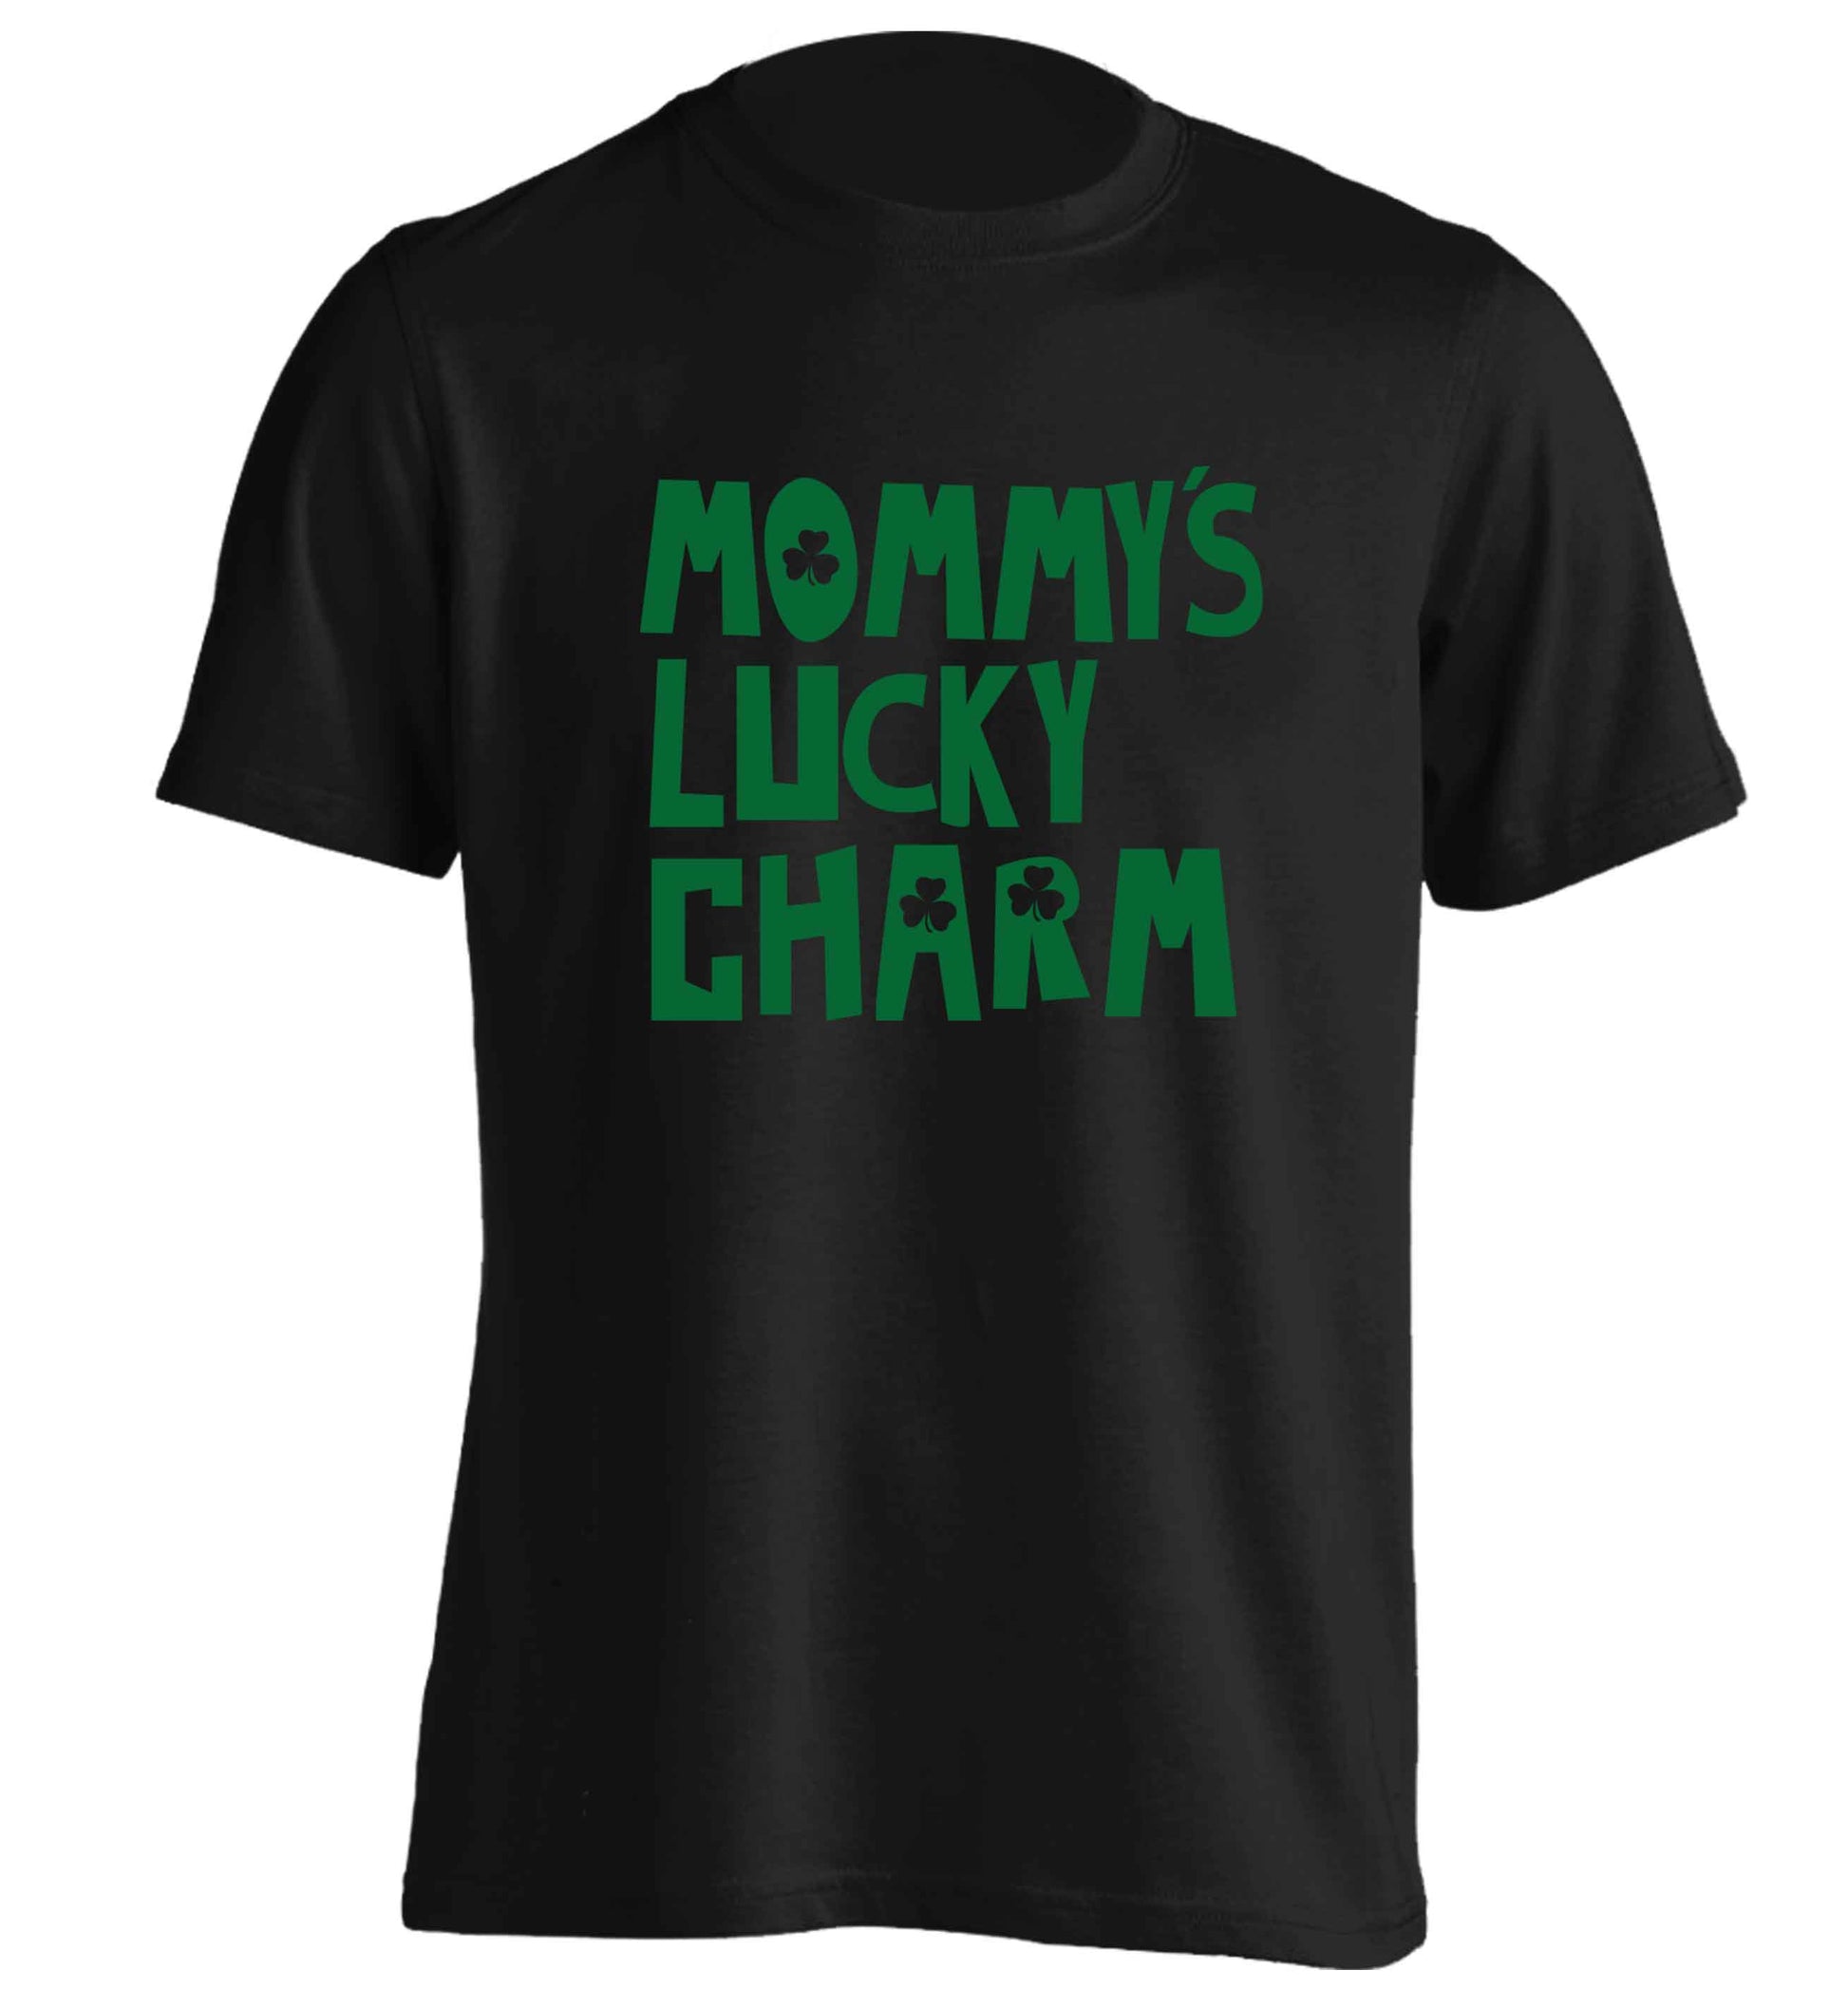 Mommy's lucky charm adults unisex black Tshirt 2XL